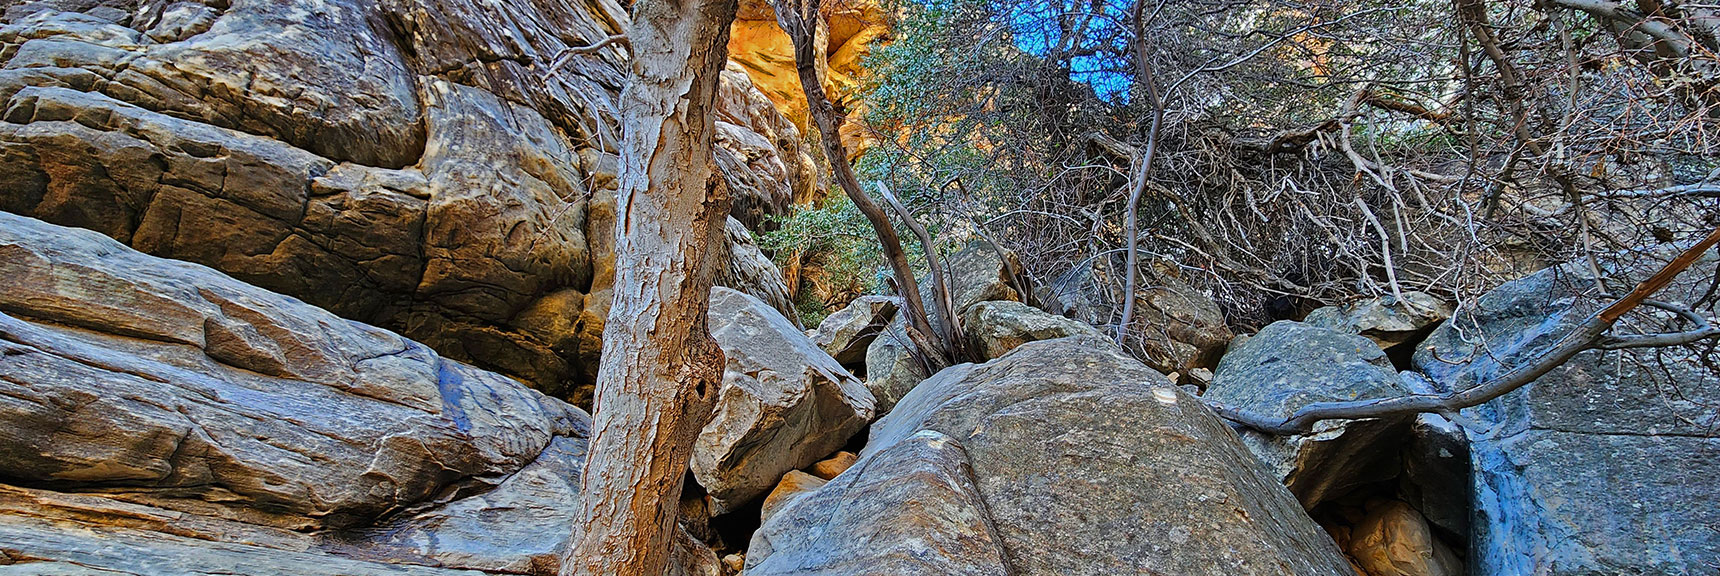 Class 3 Upward Scramble Through Chute Near Canyon Route Summit | Ice Box Canyon | Red Rock Canyon NCA, Nevada | Las Vegas Area Trails | David Smith